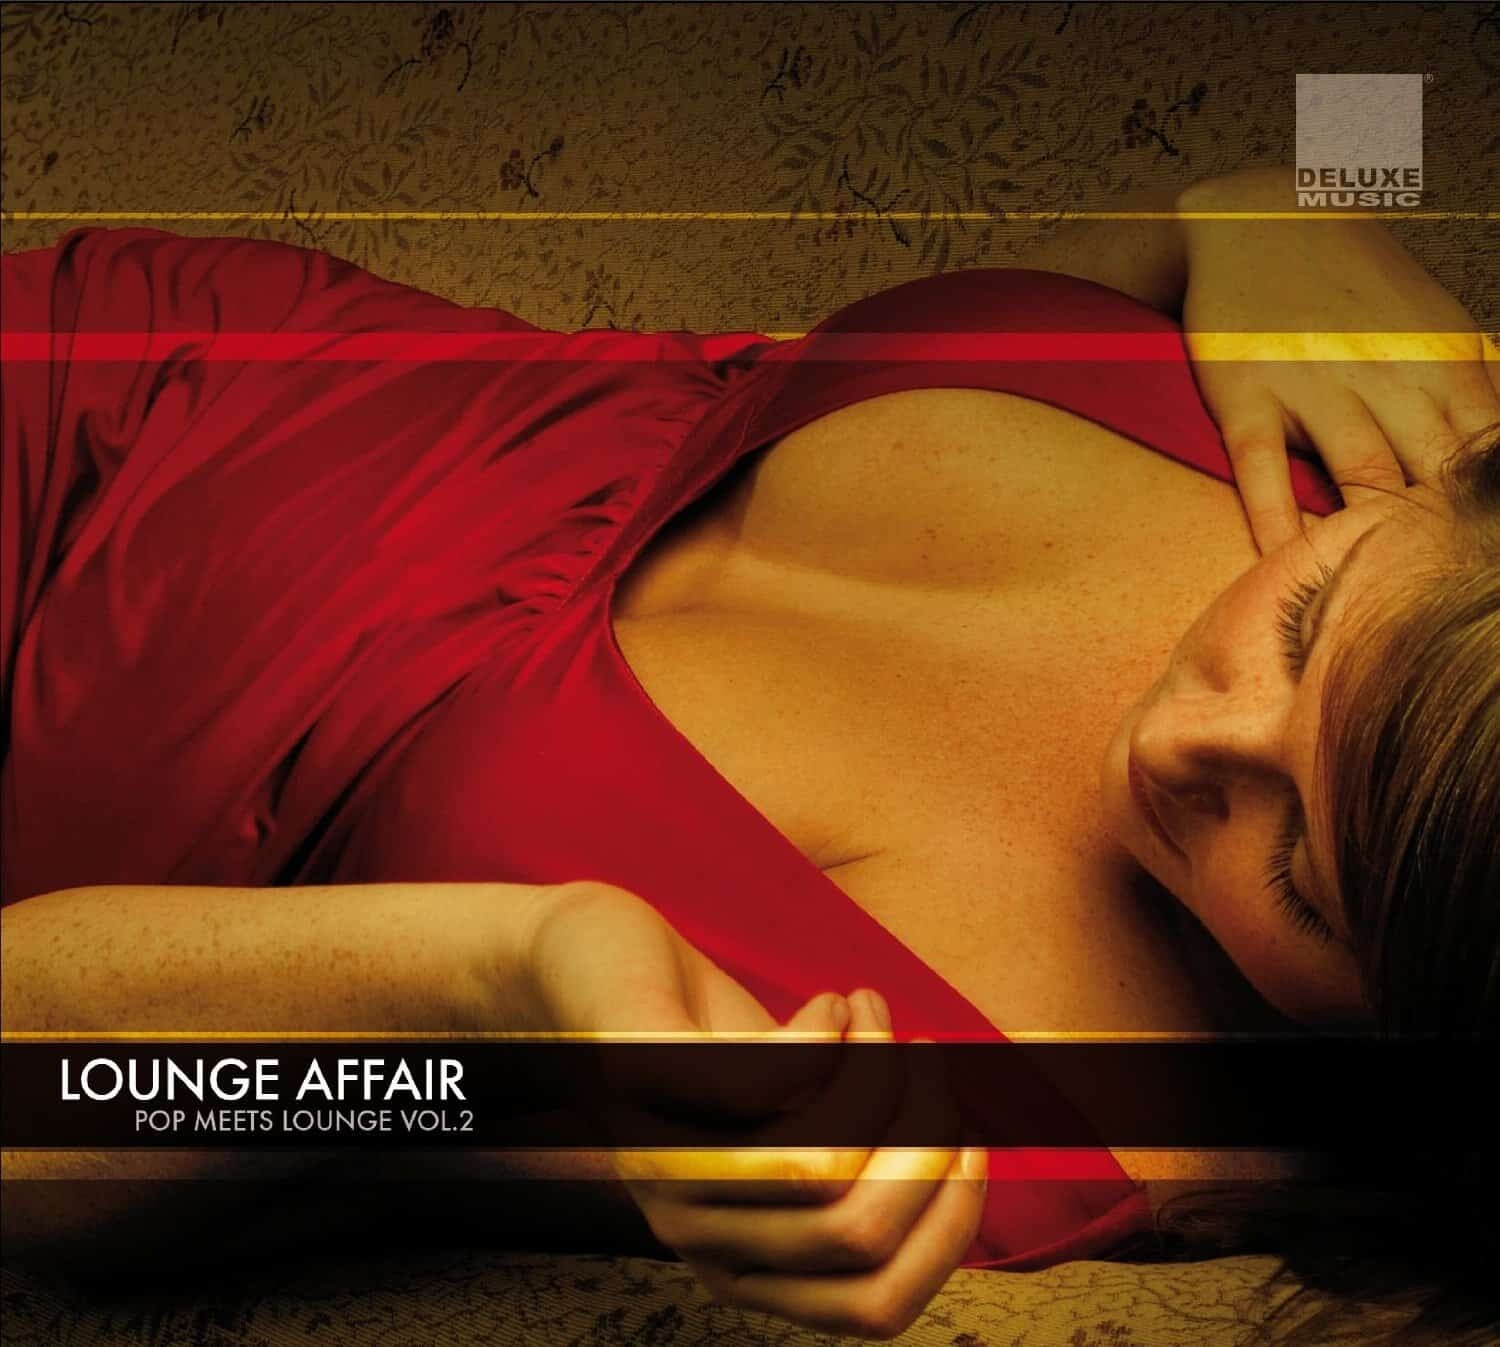 Deluxe Music - Lounge Affair - Pop meets Lounge Vol2